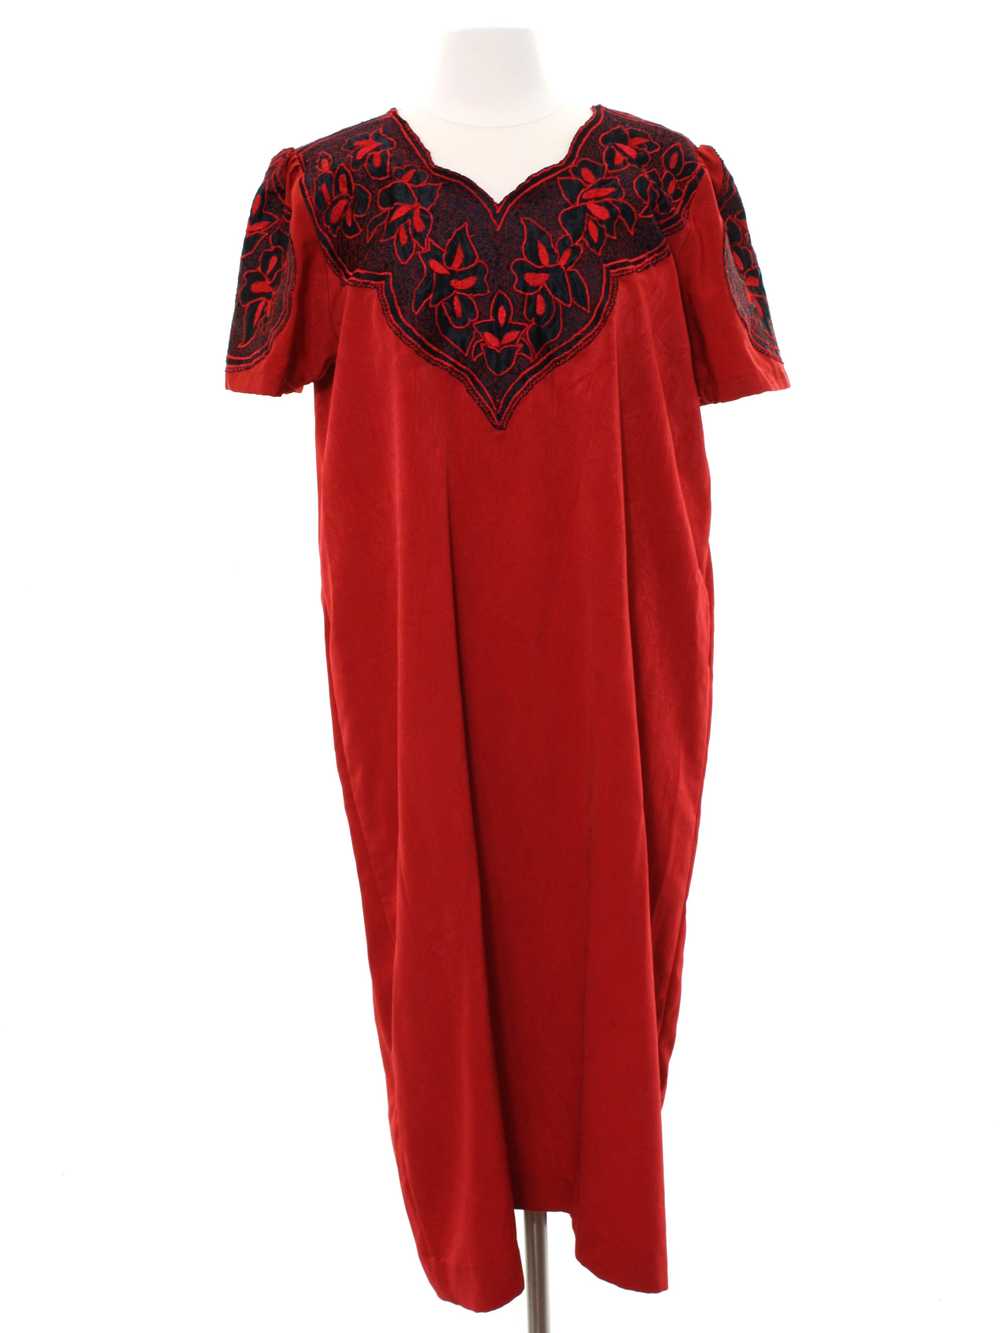 1970's Huipil Inspired Dress - image 1